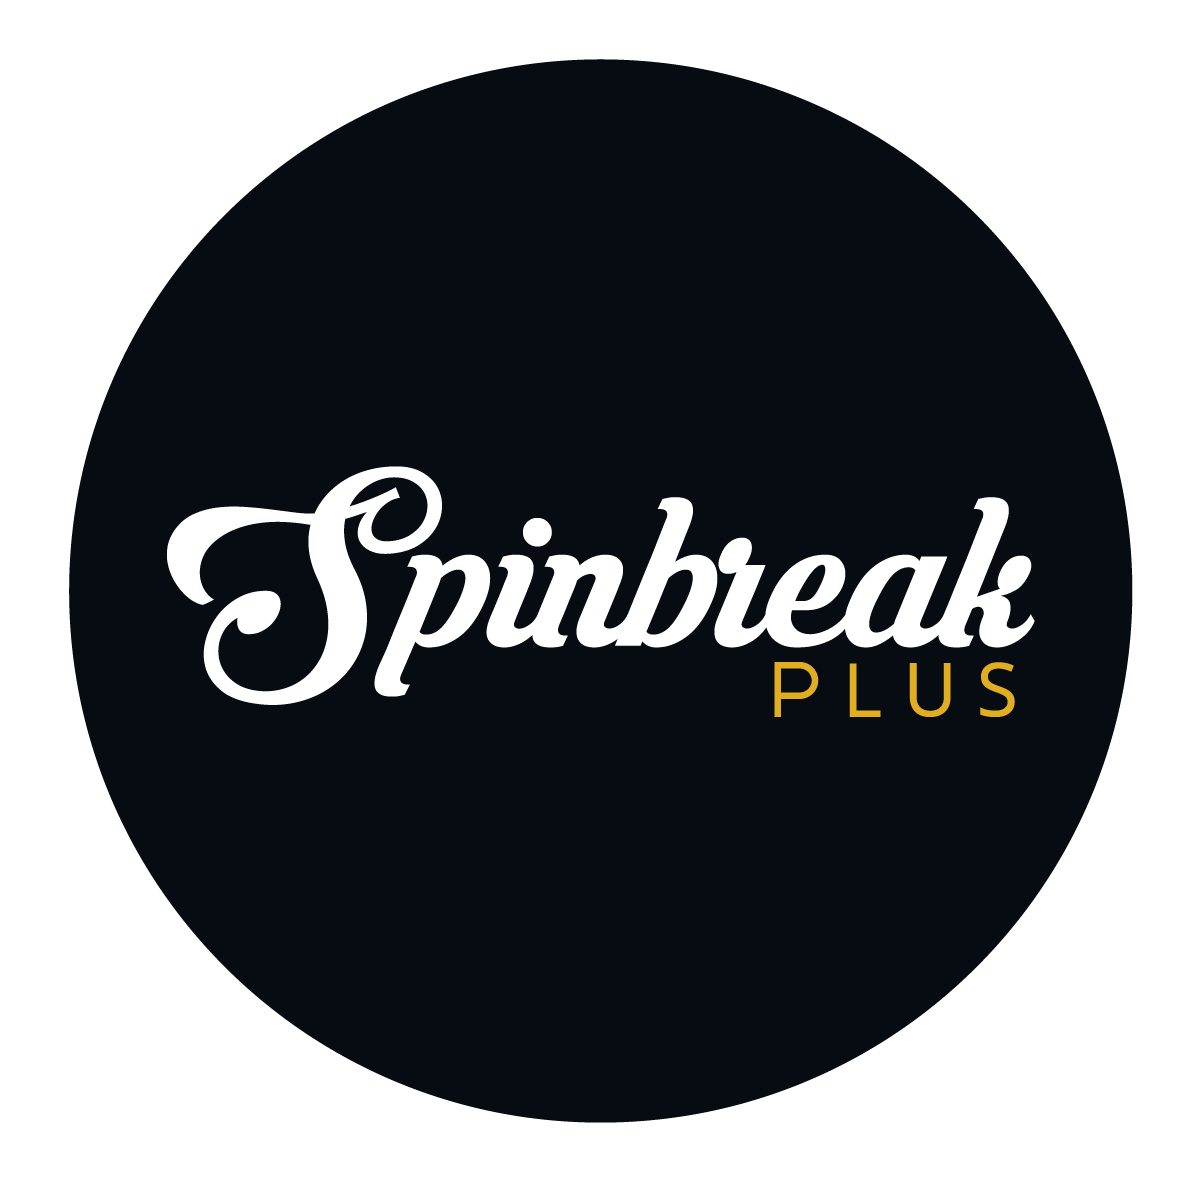 SpinbreakPLUS